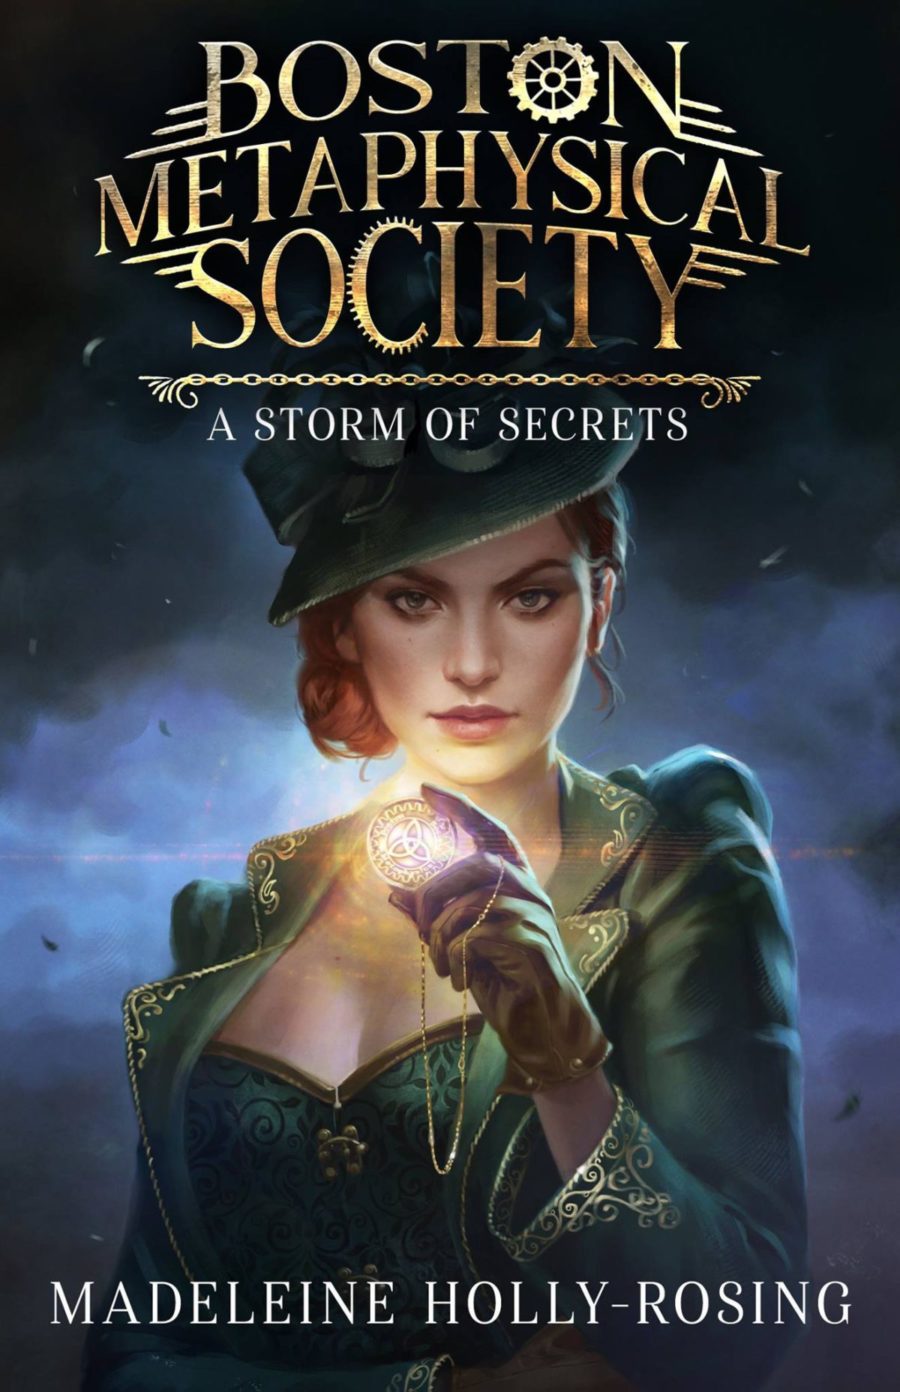 New Boston Metaphysical Society novel, A Storm of Secrets.